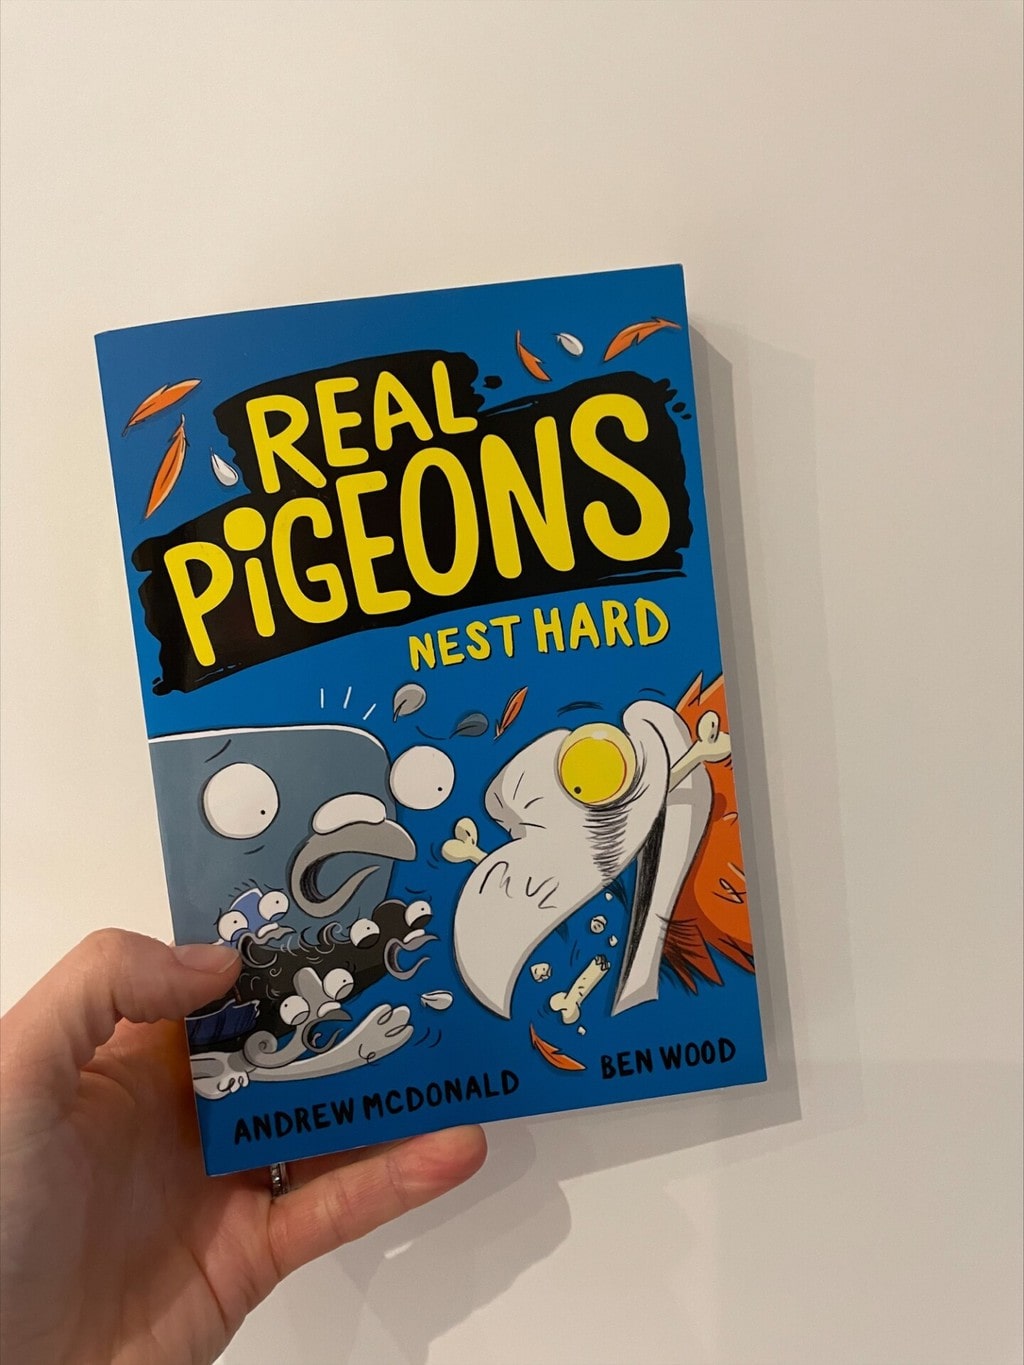 Real Pigeons Nest Hard – Andrew McDonald (author), Ben Wood (illustrator), Farshore (imprint of HarperCollins) (publisher)